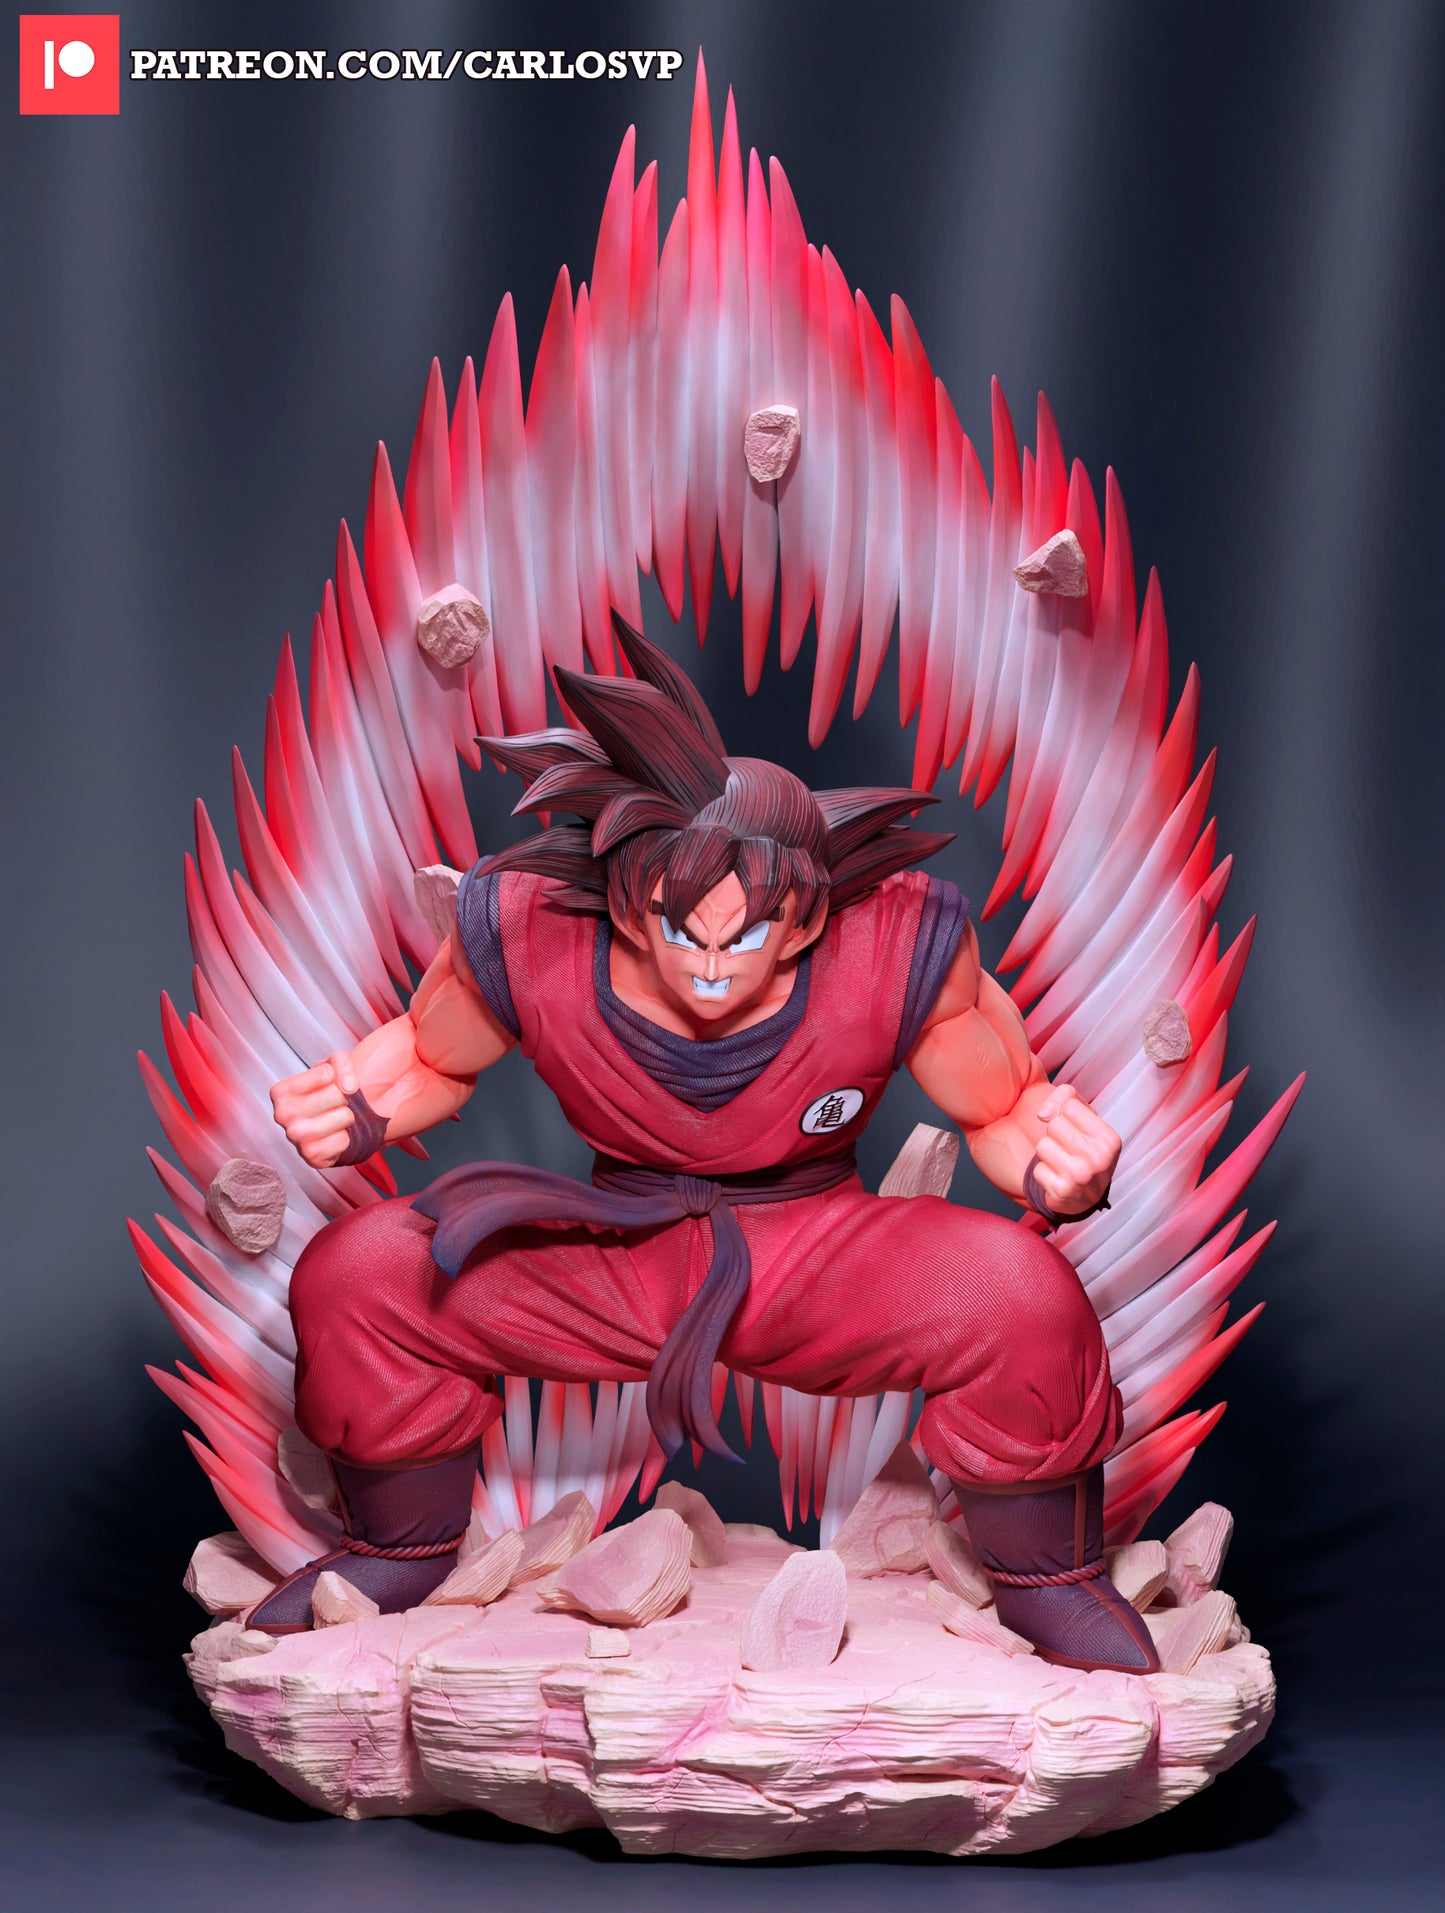 Goku - Dragon Ball - Carlos V